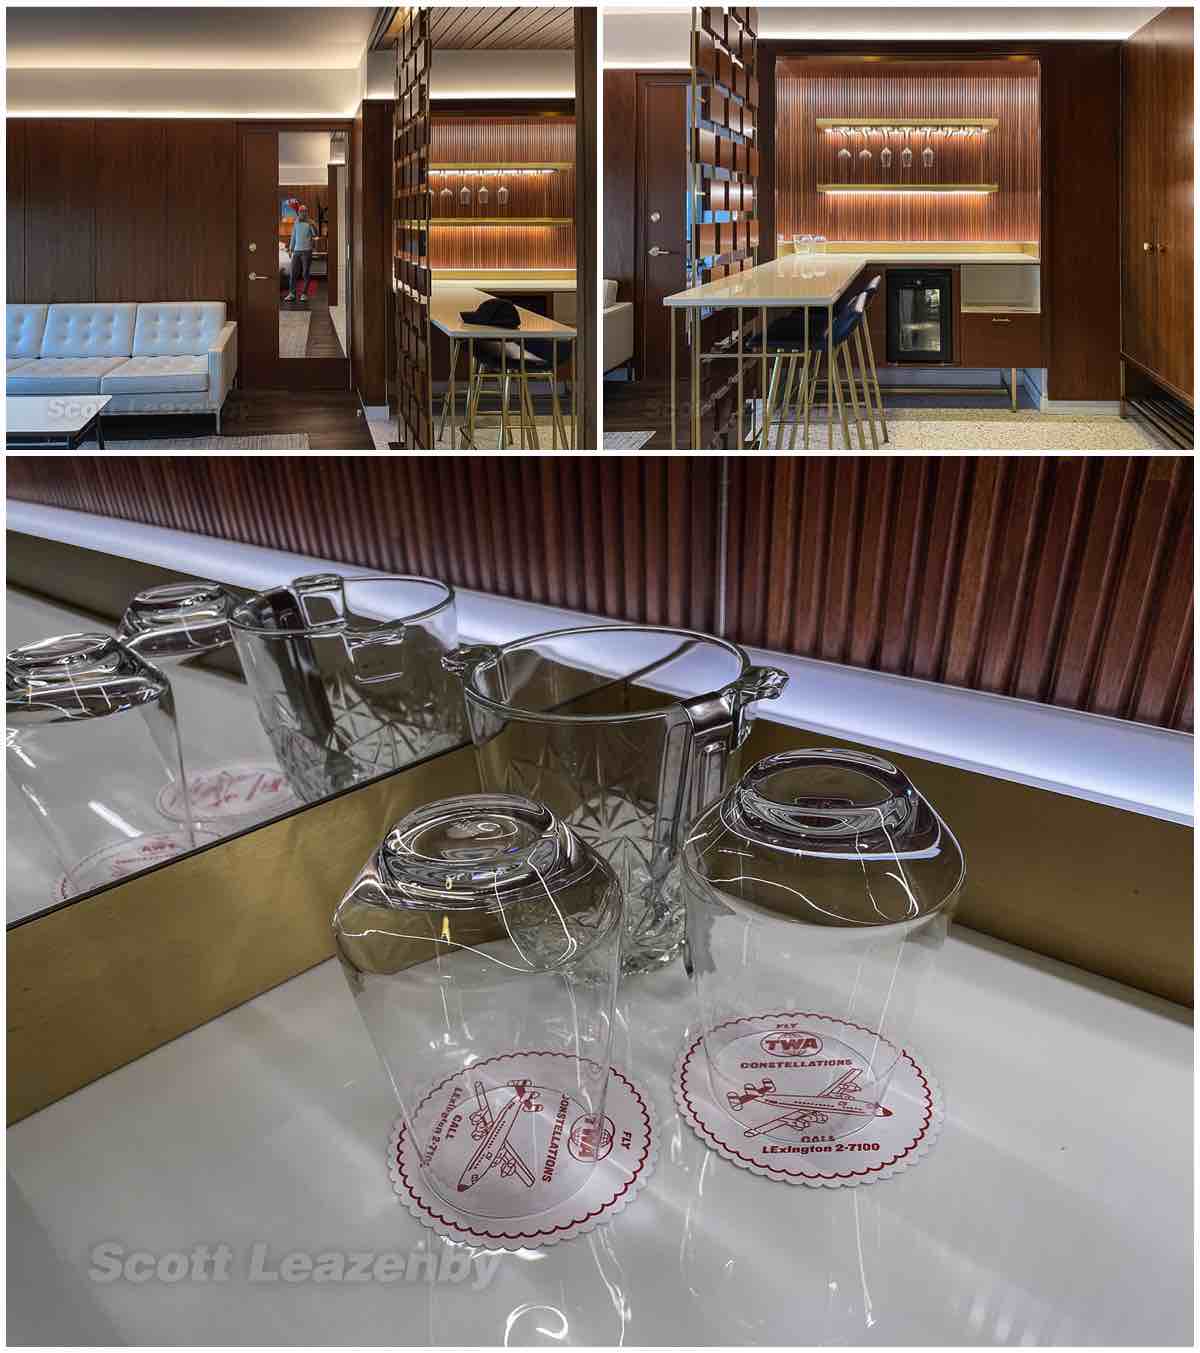 TWA hotel Howard Hughes suite bar details